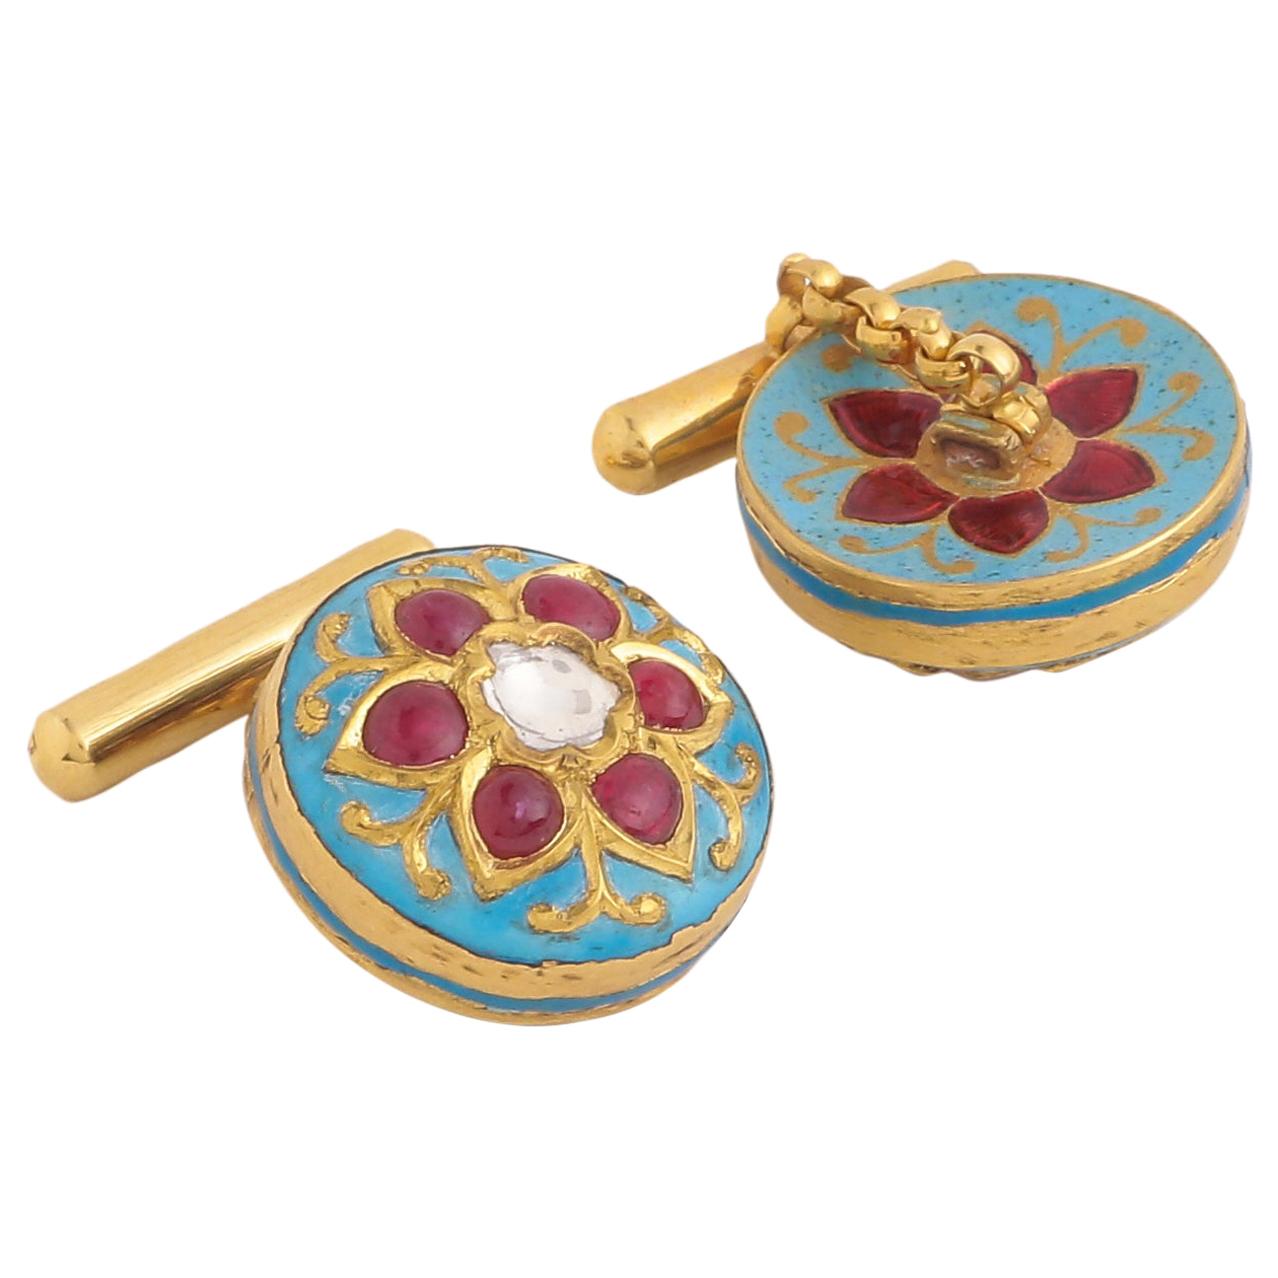 Cufflinks Handcrafted in 18 Karat Gold with Diamonds Rubies and Fine Enamel Work